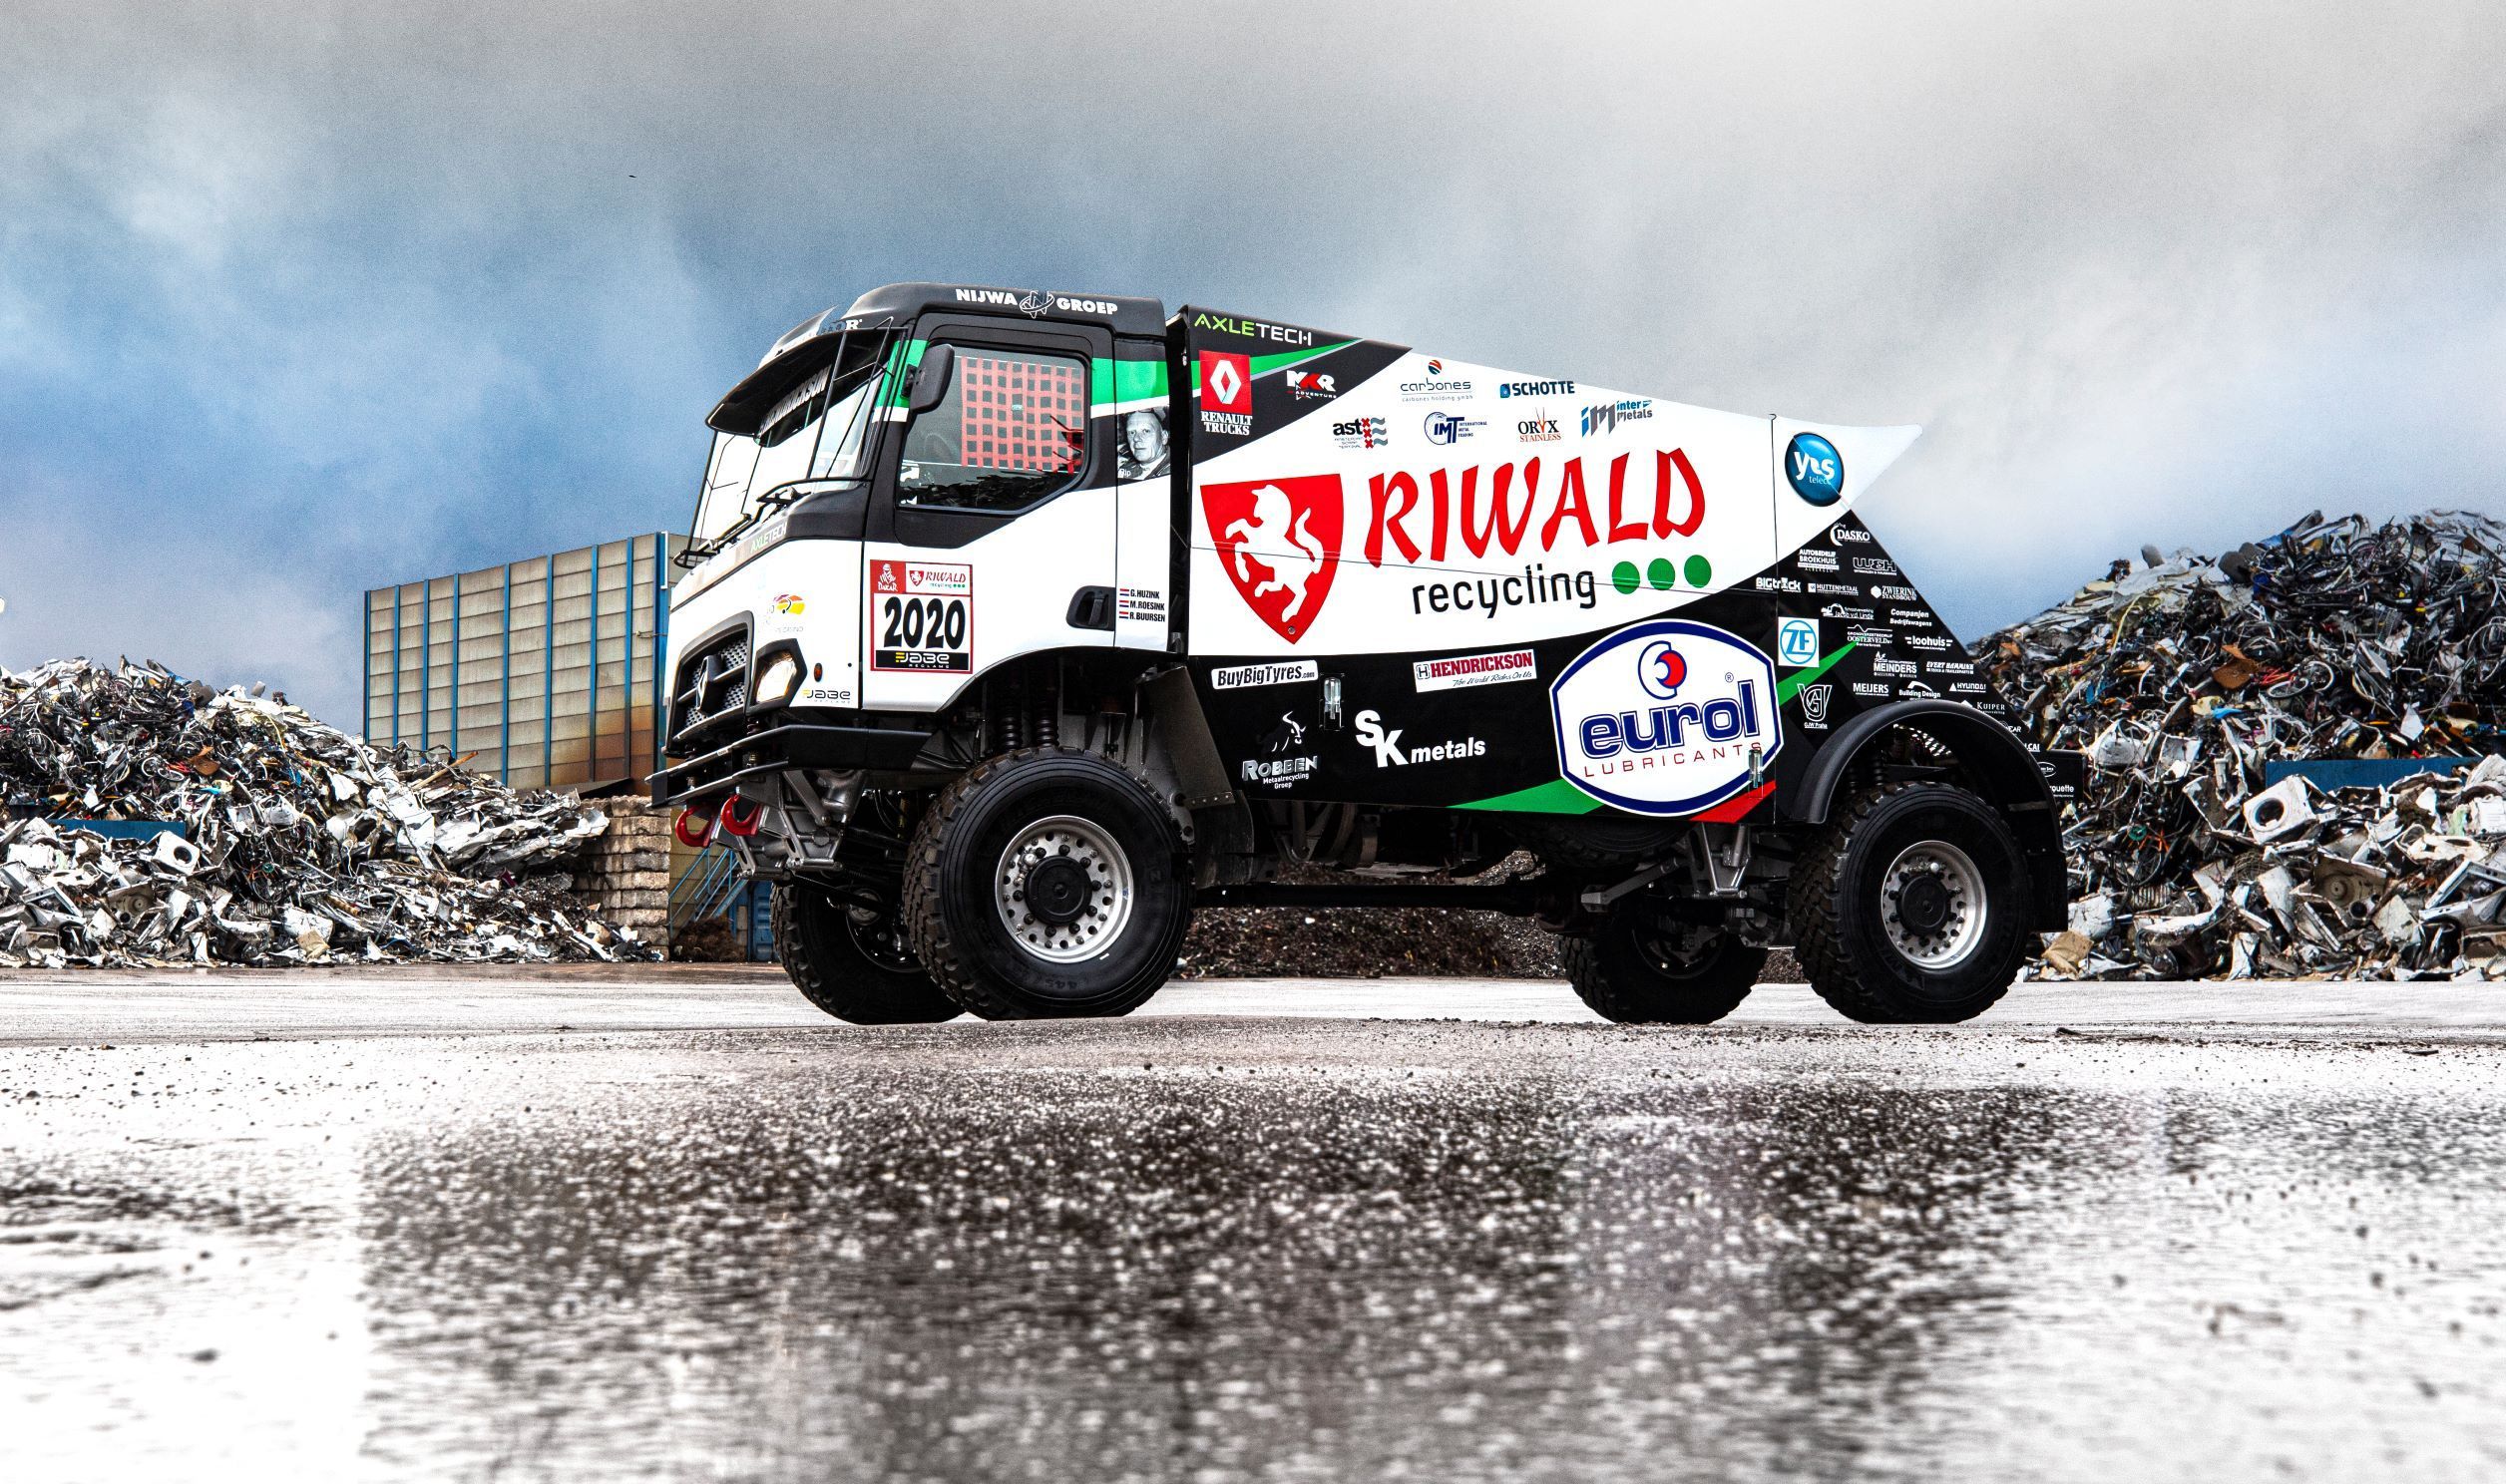 Riwald-Dakar-Truck-2019.jpg